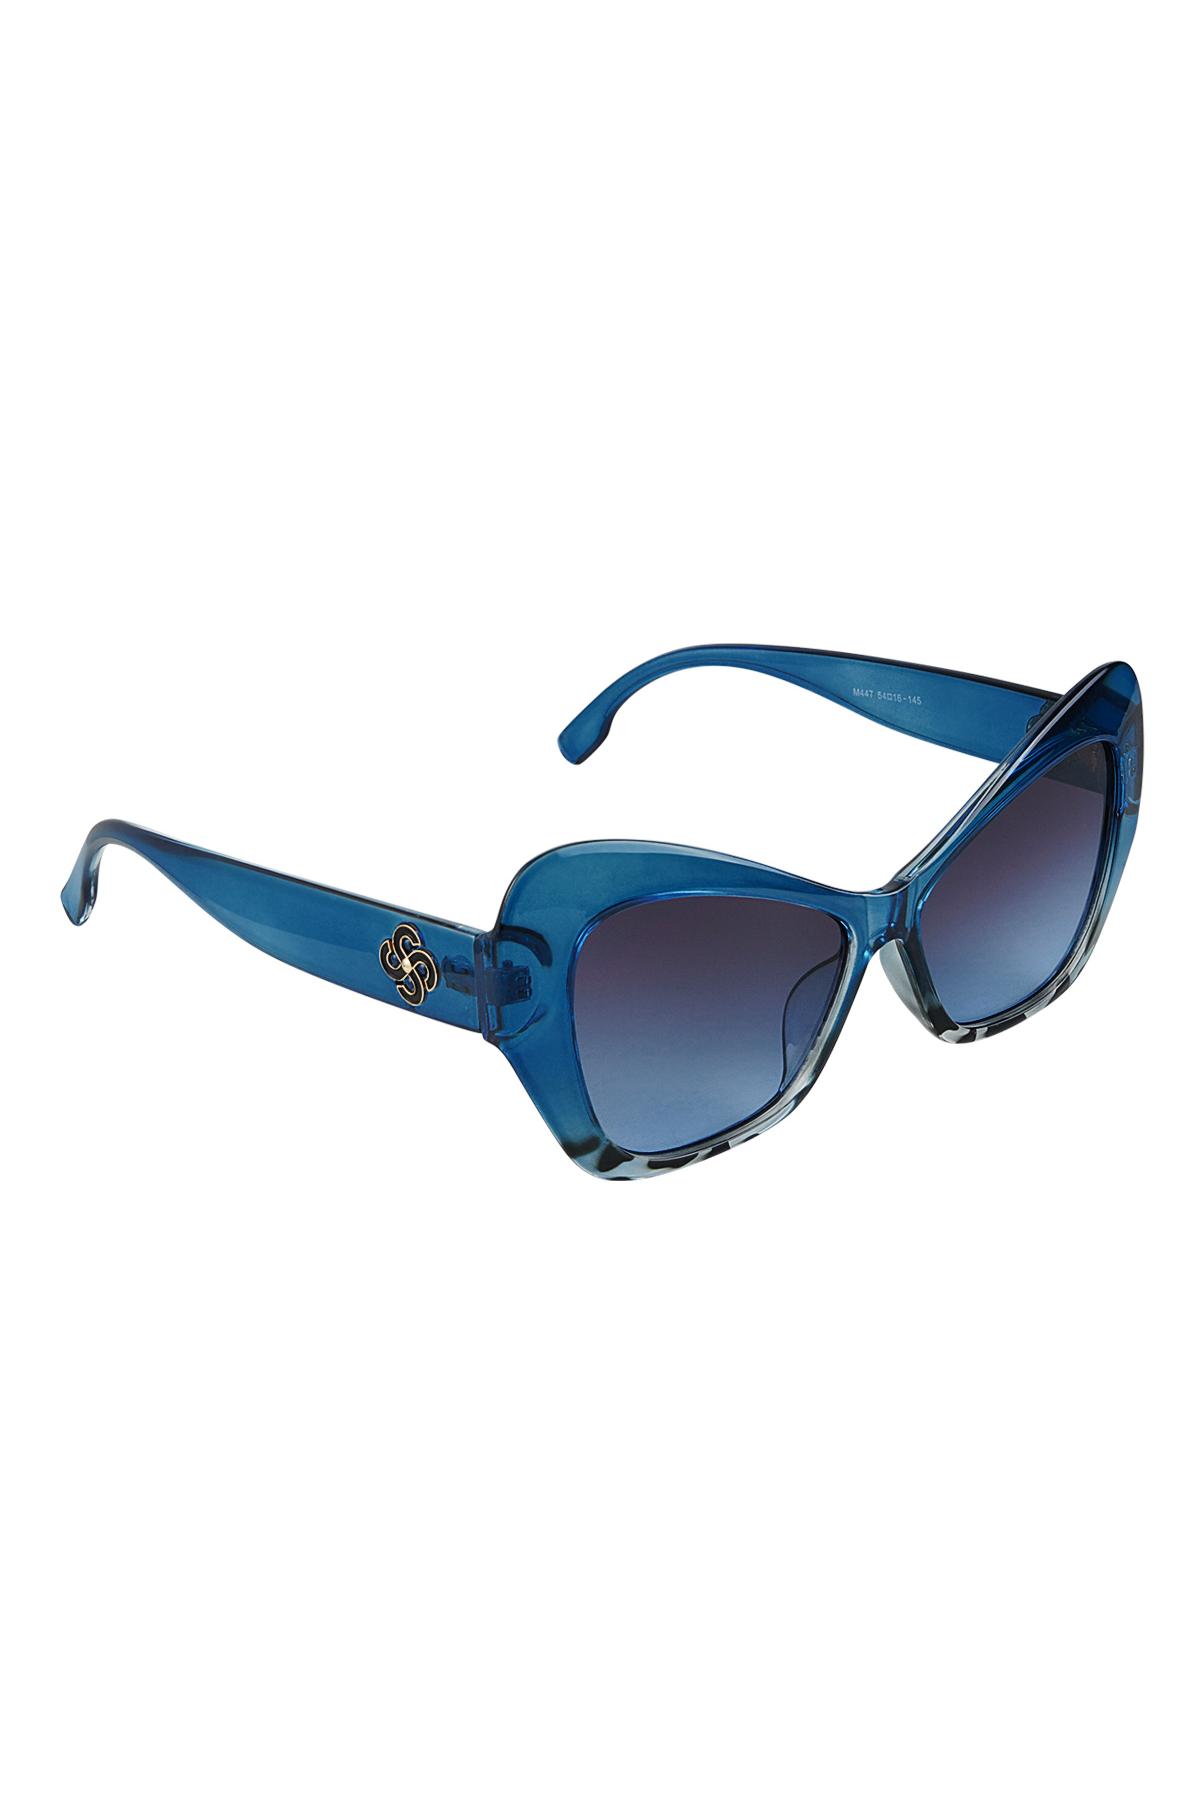 Sunglasses statement Blue PC One size 